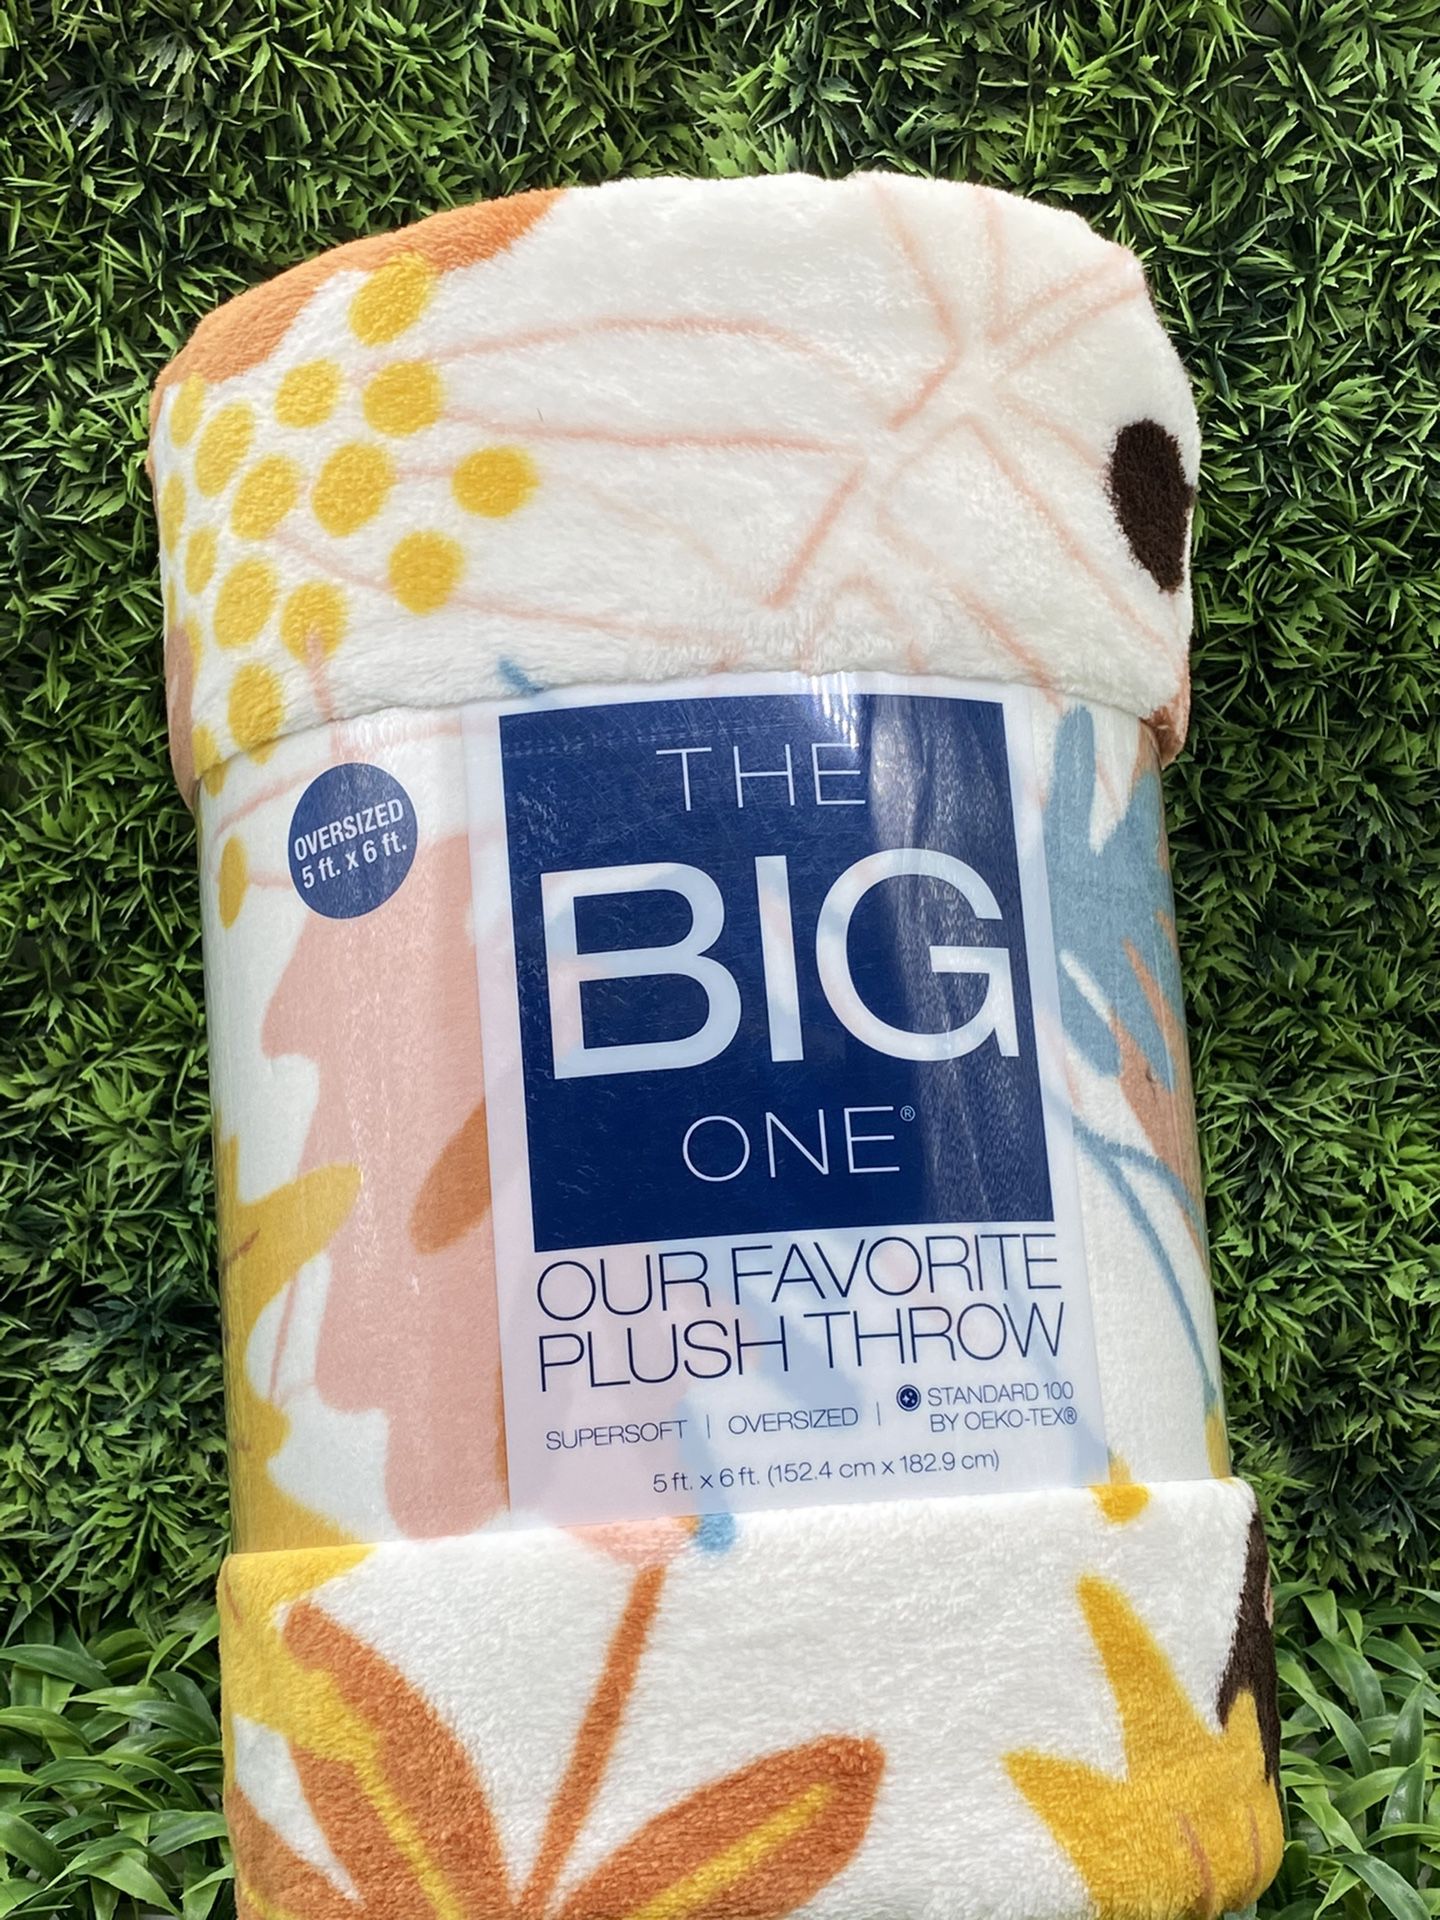 The Big One Plush Throw (blanket)